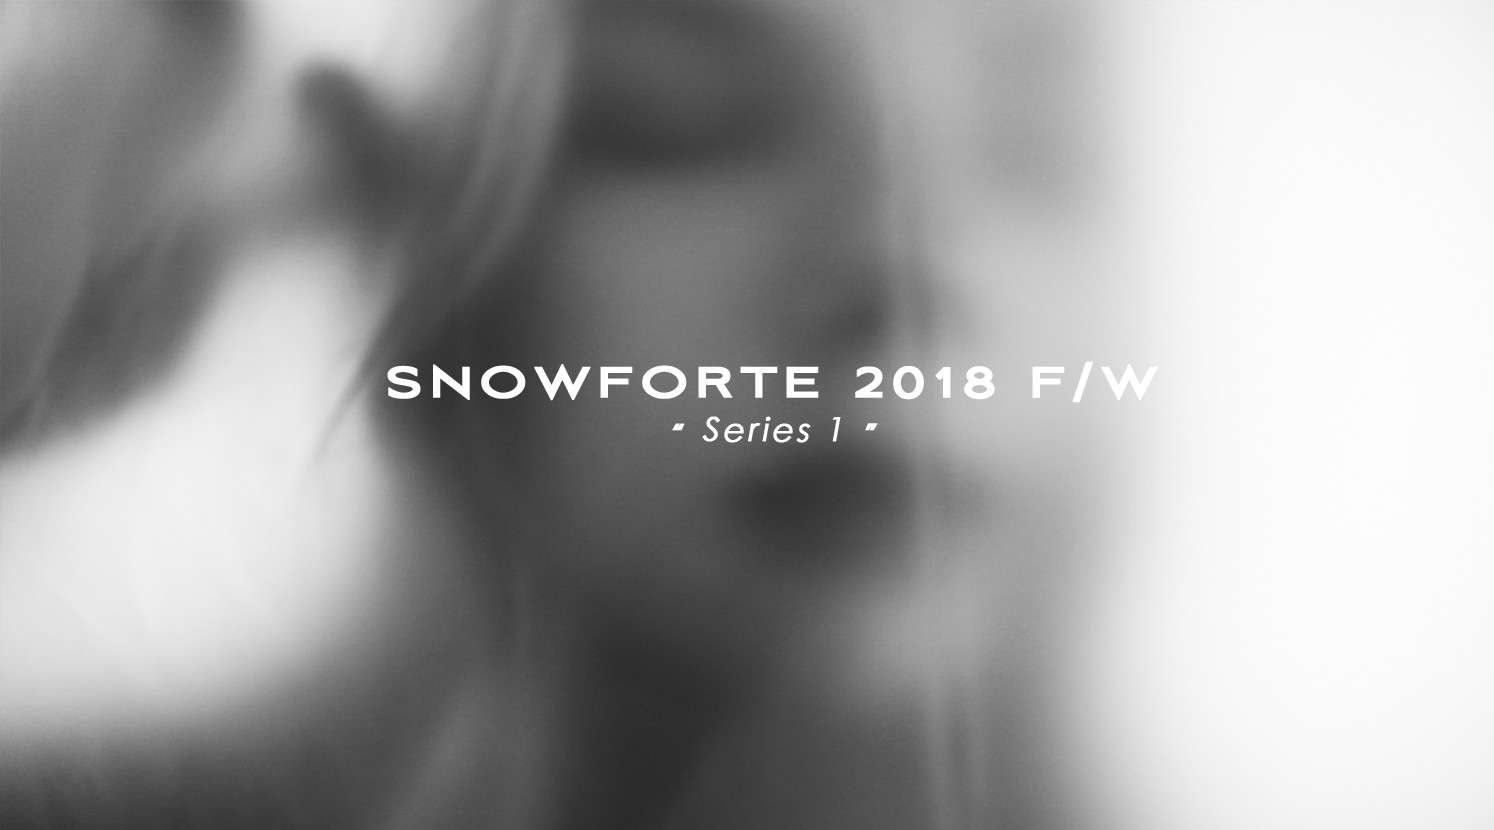 SNOWFORTE F/W "Series 1"